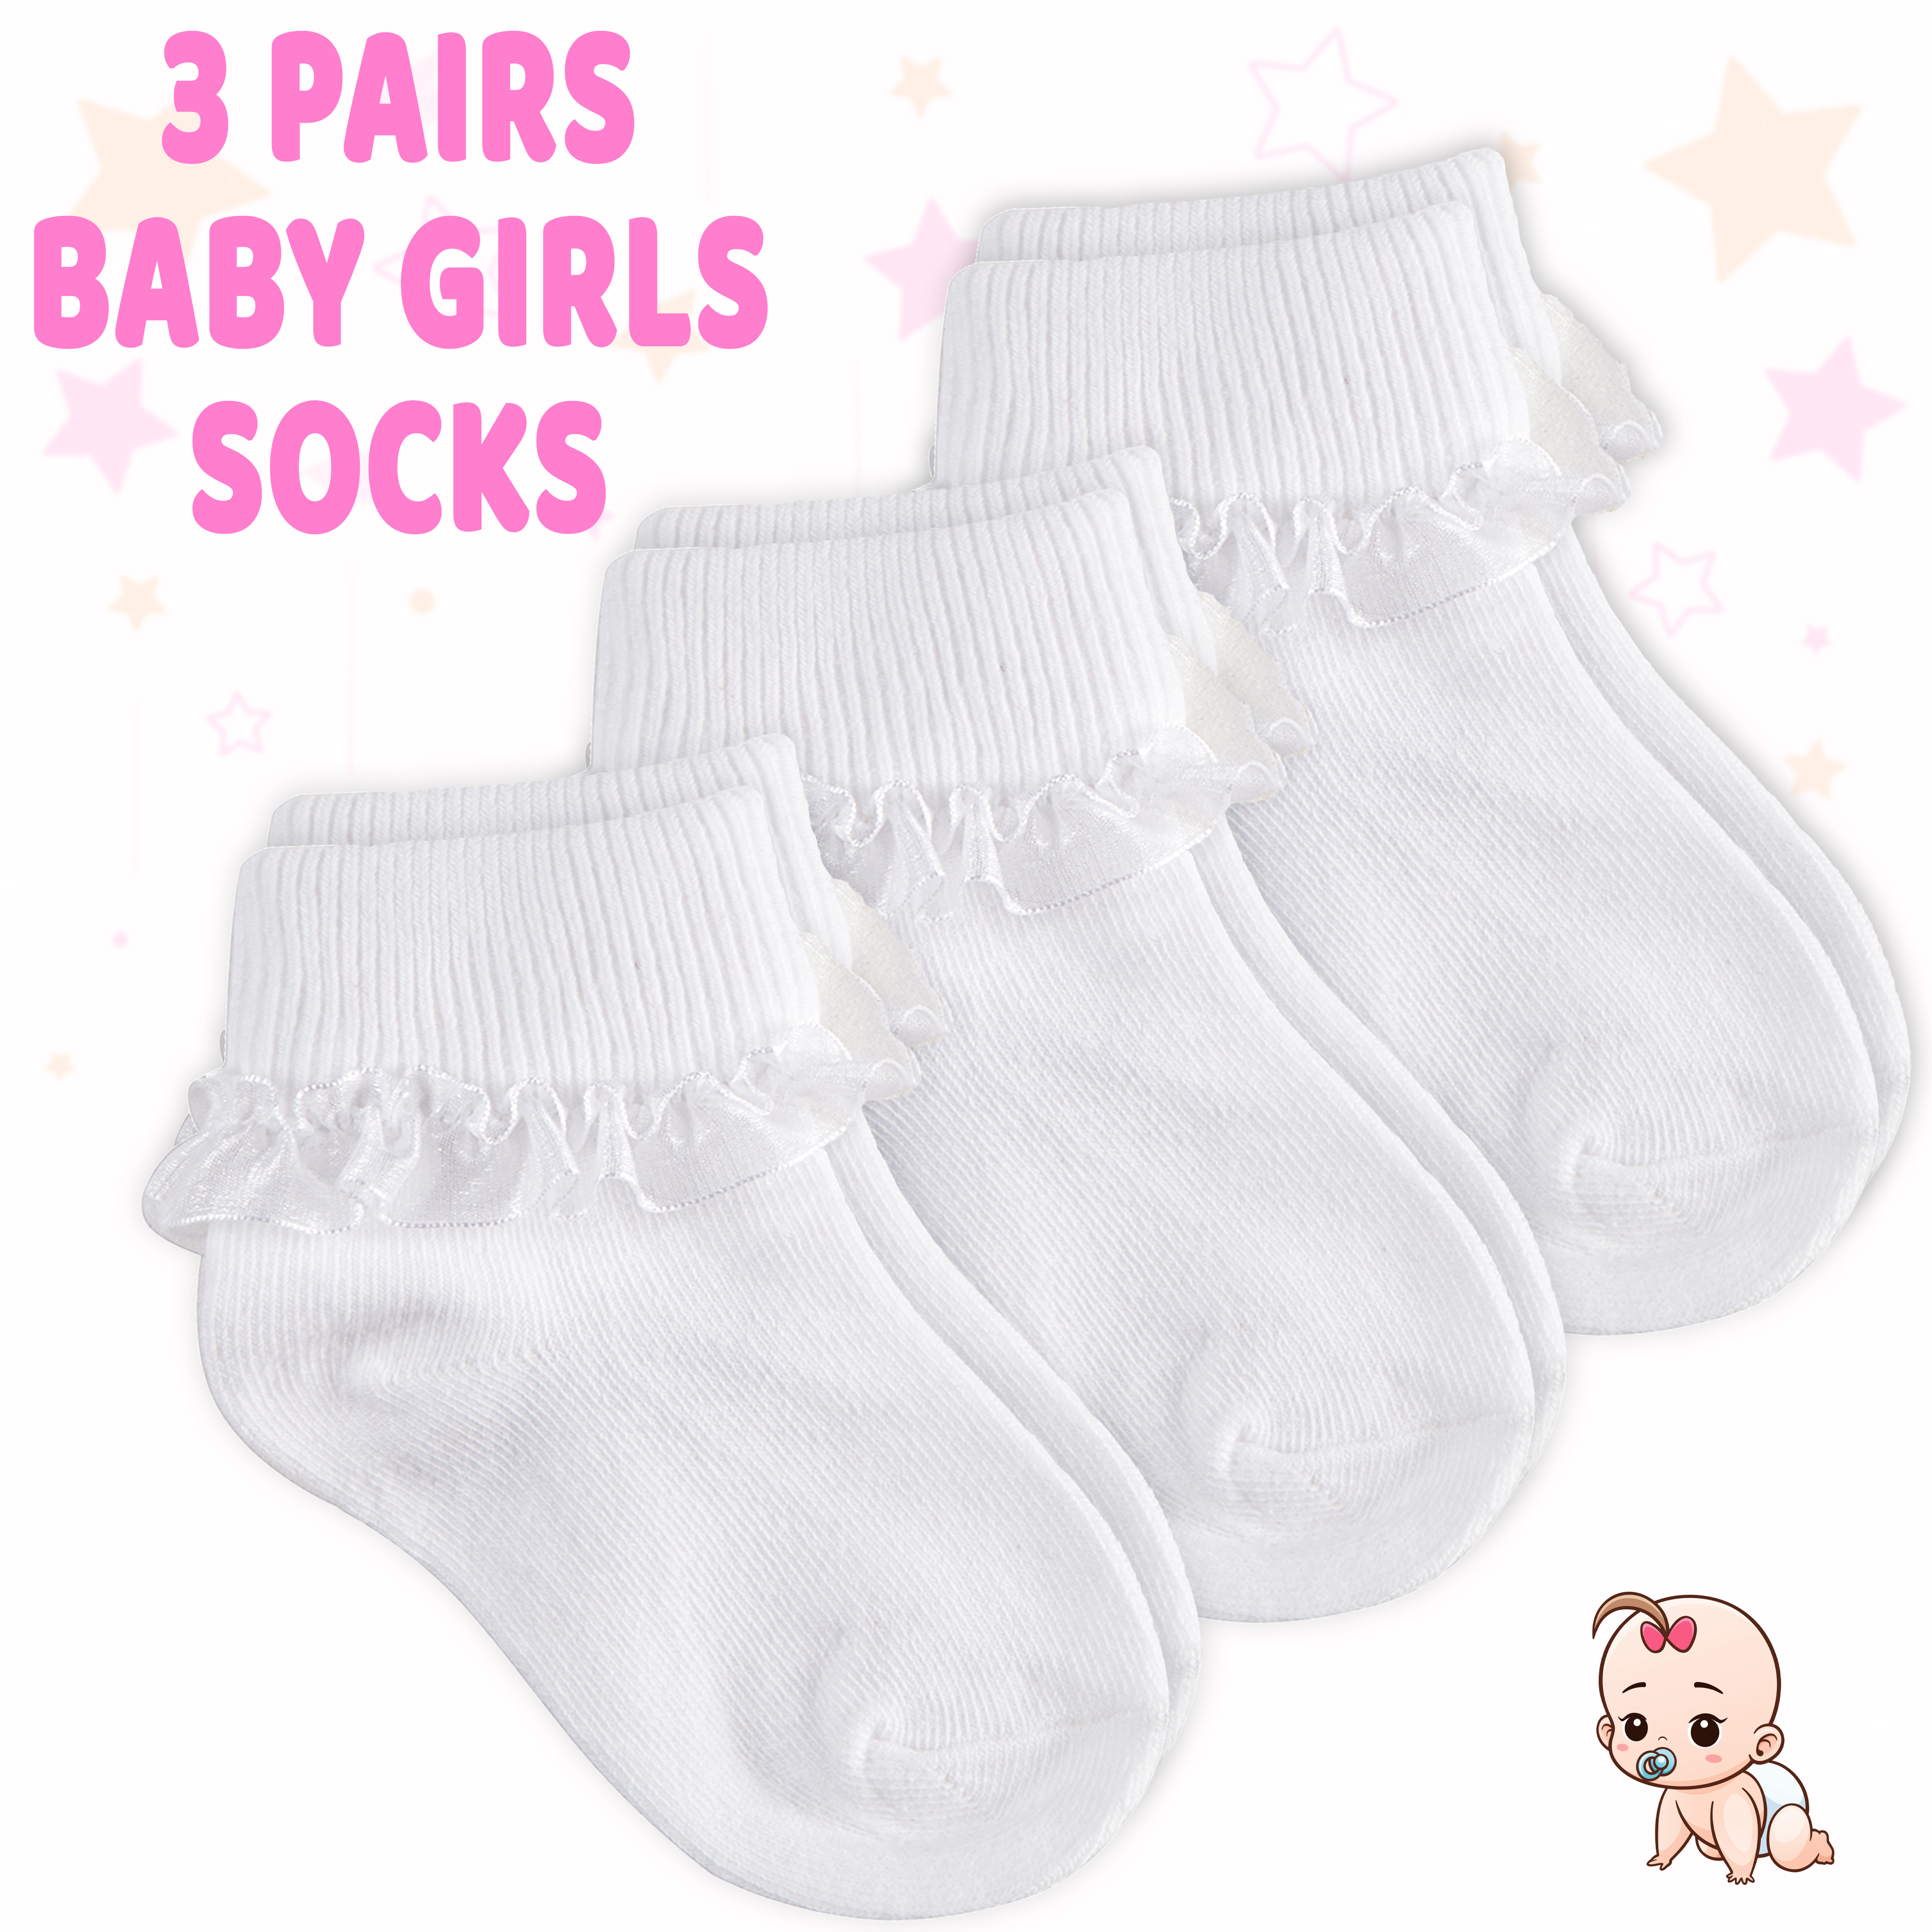 3 Pairs Baby Girls White Socks Size UK 3-5.5 EUR 19-22 Girls Frilly Lace socks